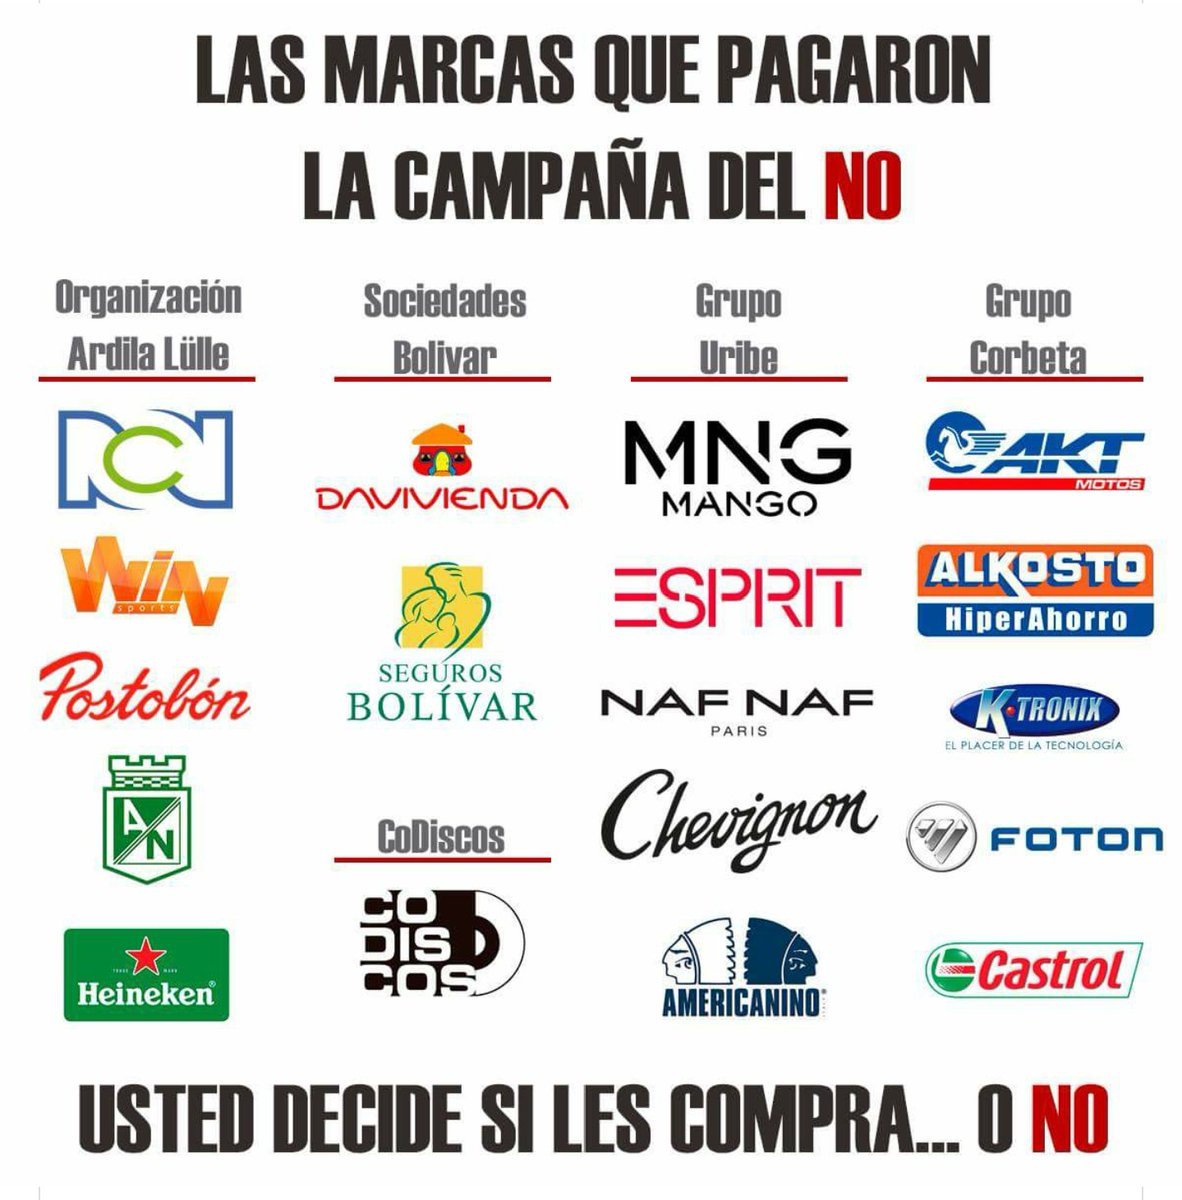 Boicot A Estas Organizaciones.
#SiALaPaz 
#ArdilaLulle #SociedadesBolivar #GrupoUribe #GrupoCorbeta #RCN #Postobon #Davivienda